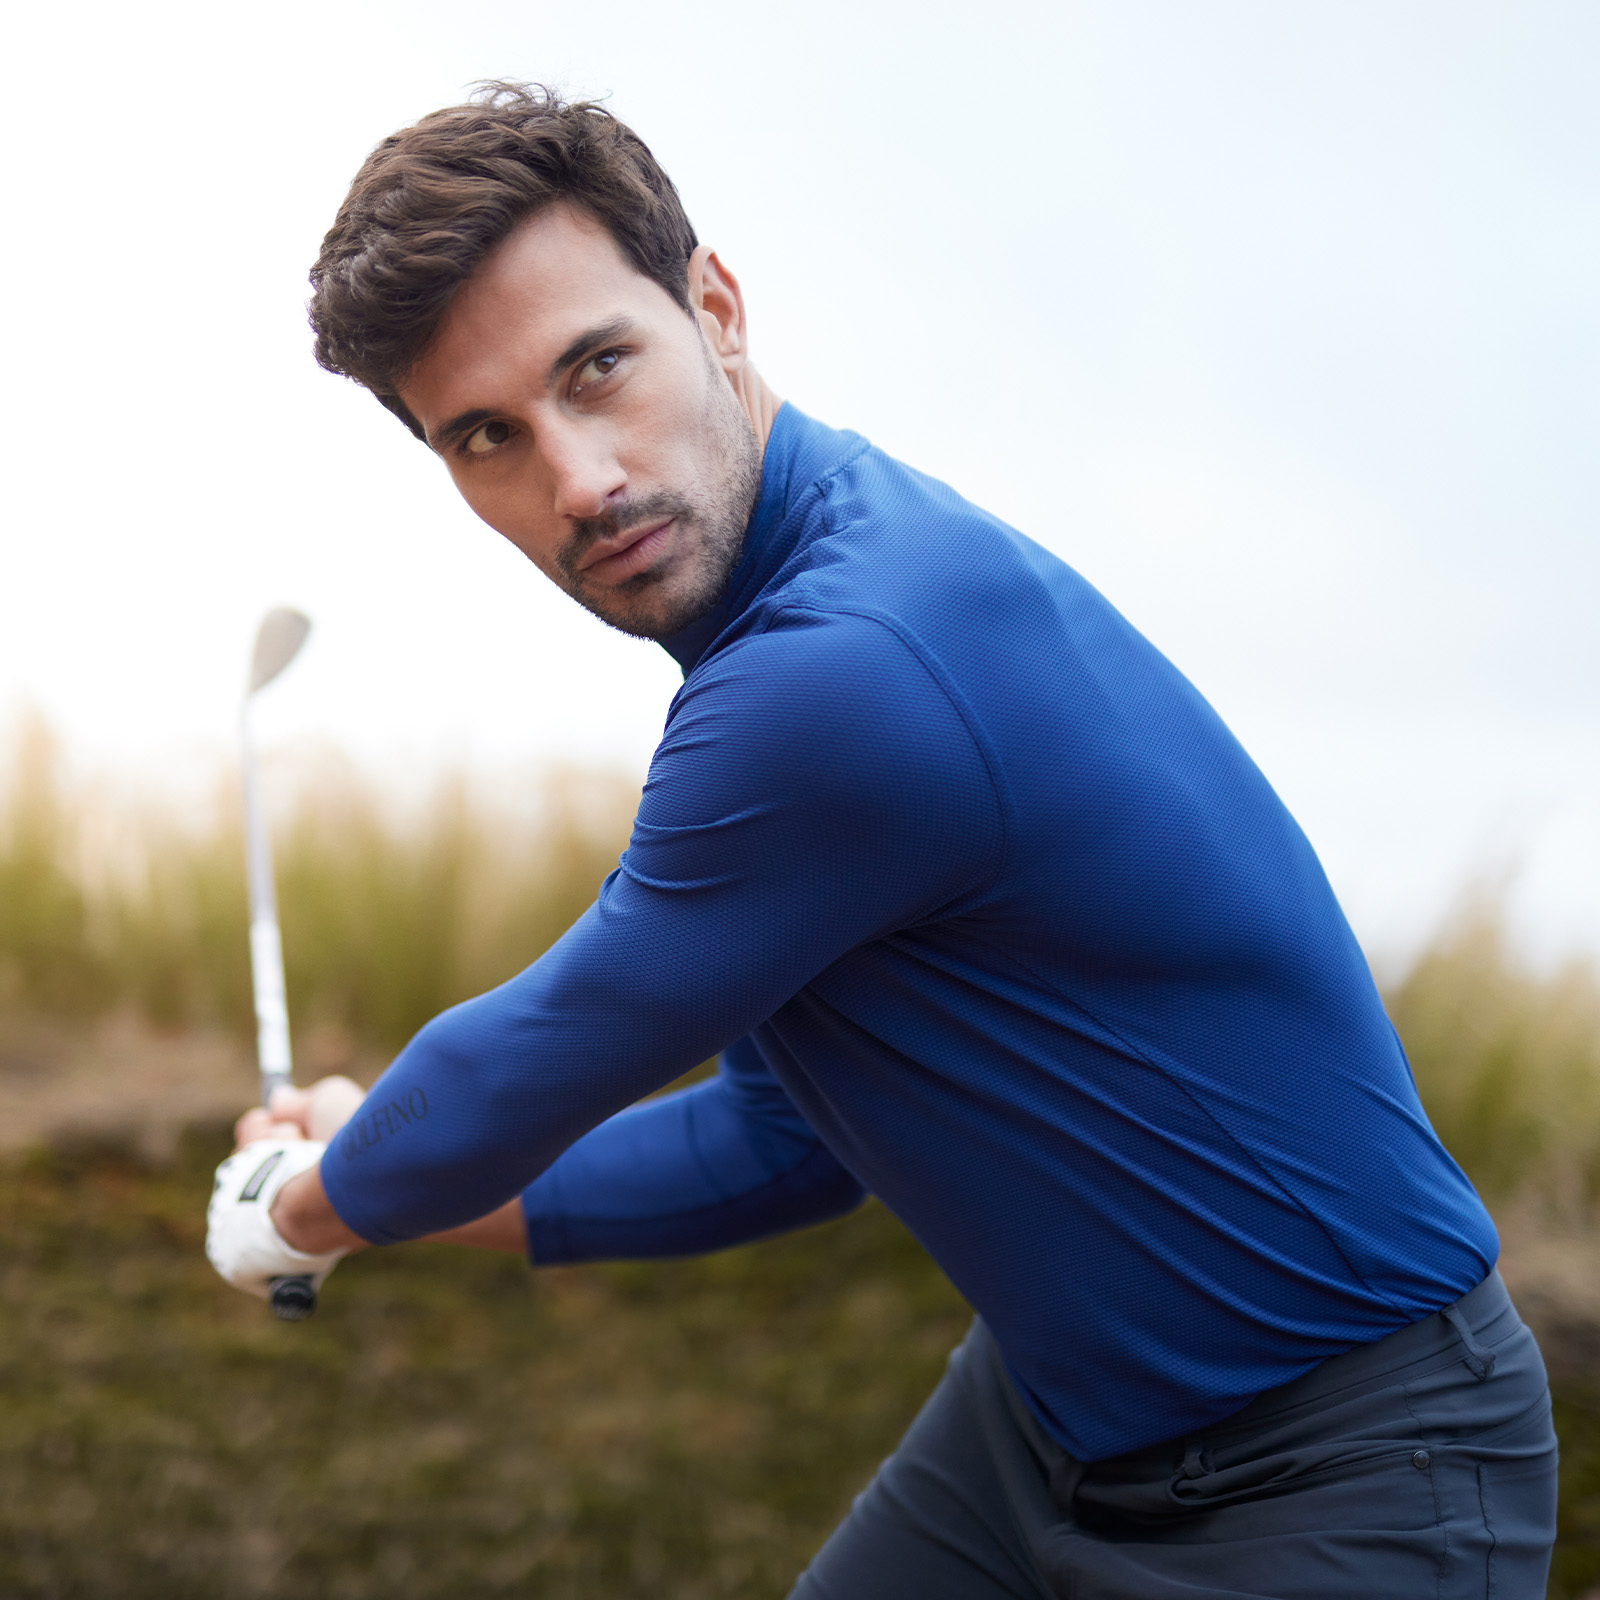 Camiseta de golf de manga larga en tejido bubble jacquard para hombre